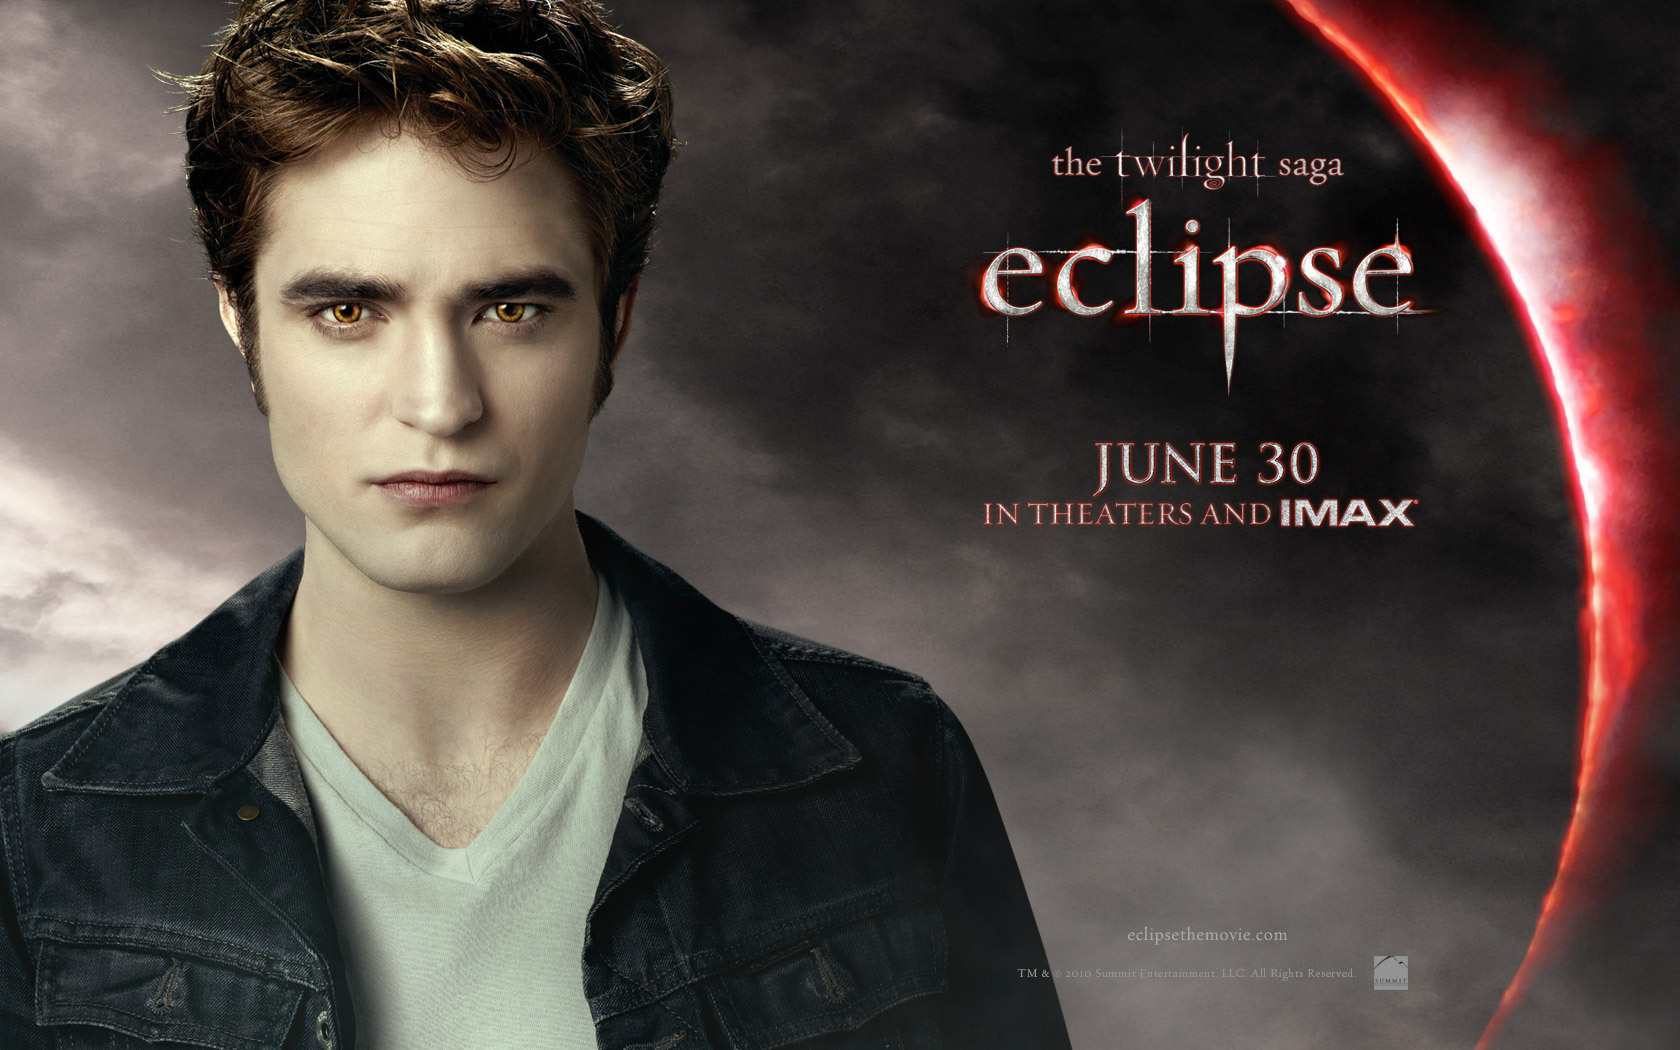 Robert Pattinson Twilight Saga Eclipse HD Wallpaper And Background